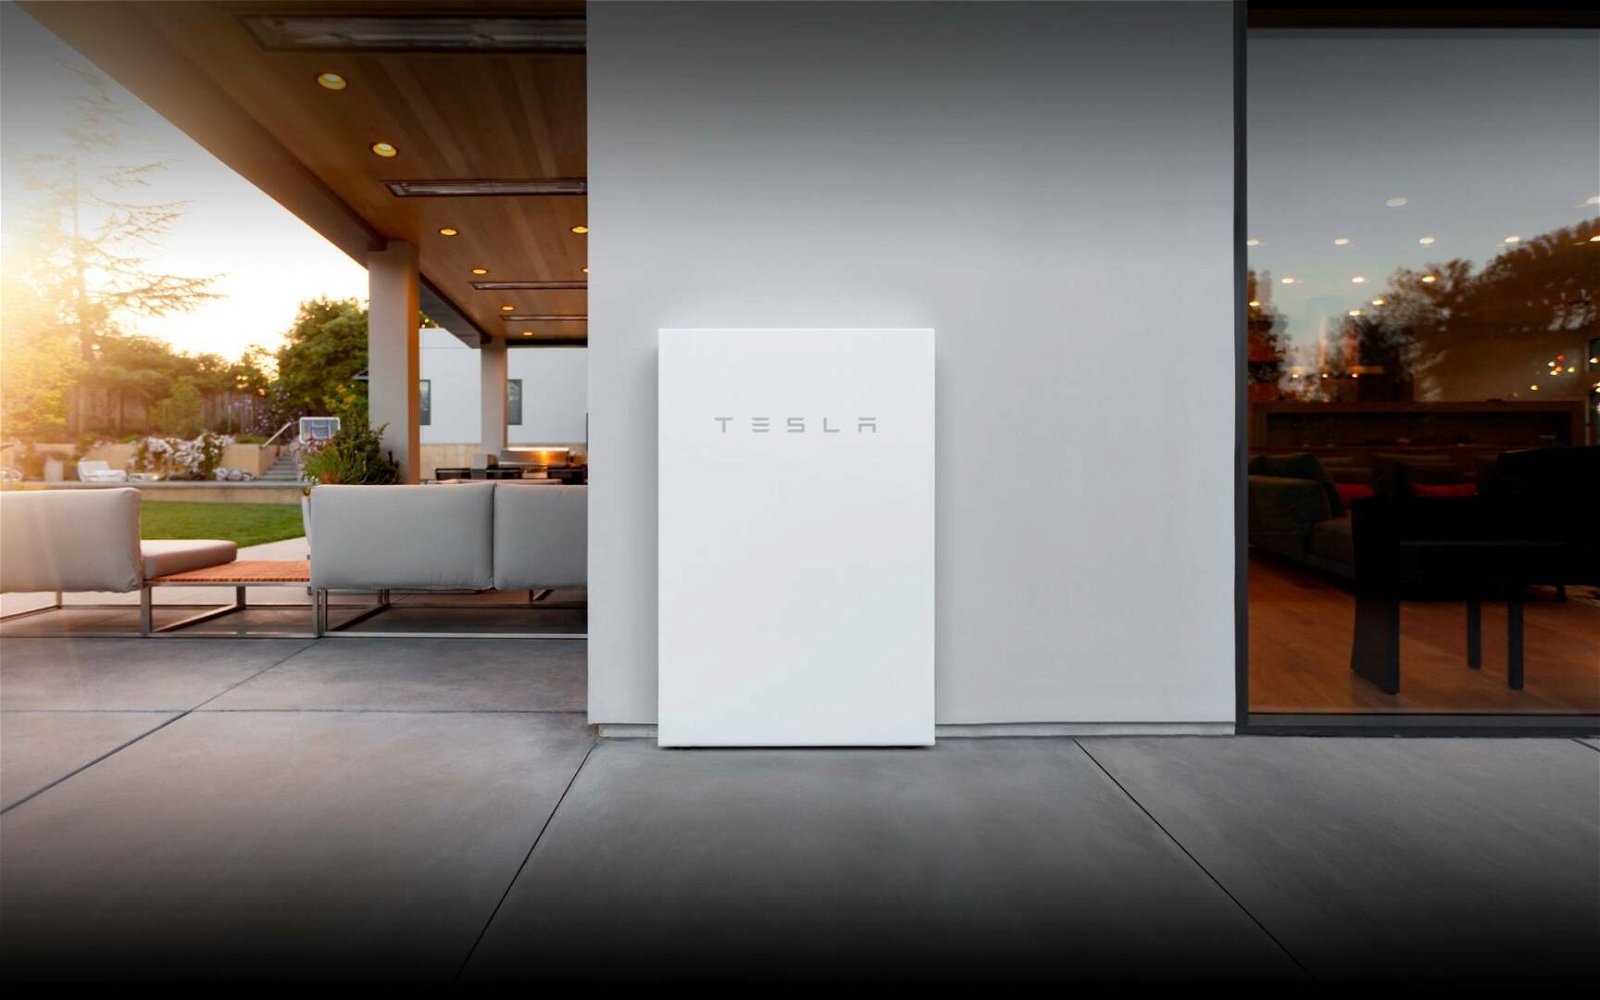 Immagine di Texas, Tesla Powerwall rimedia ai blackout di corrente